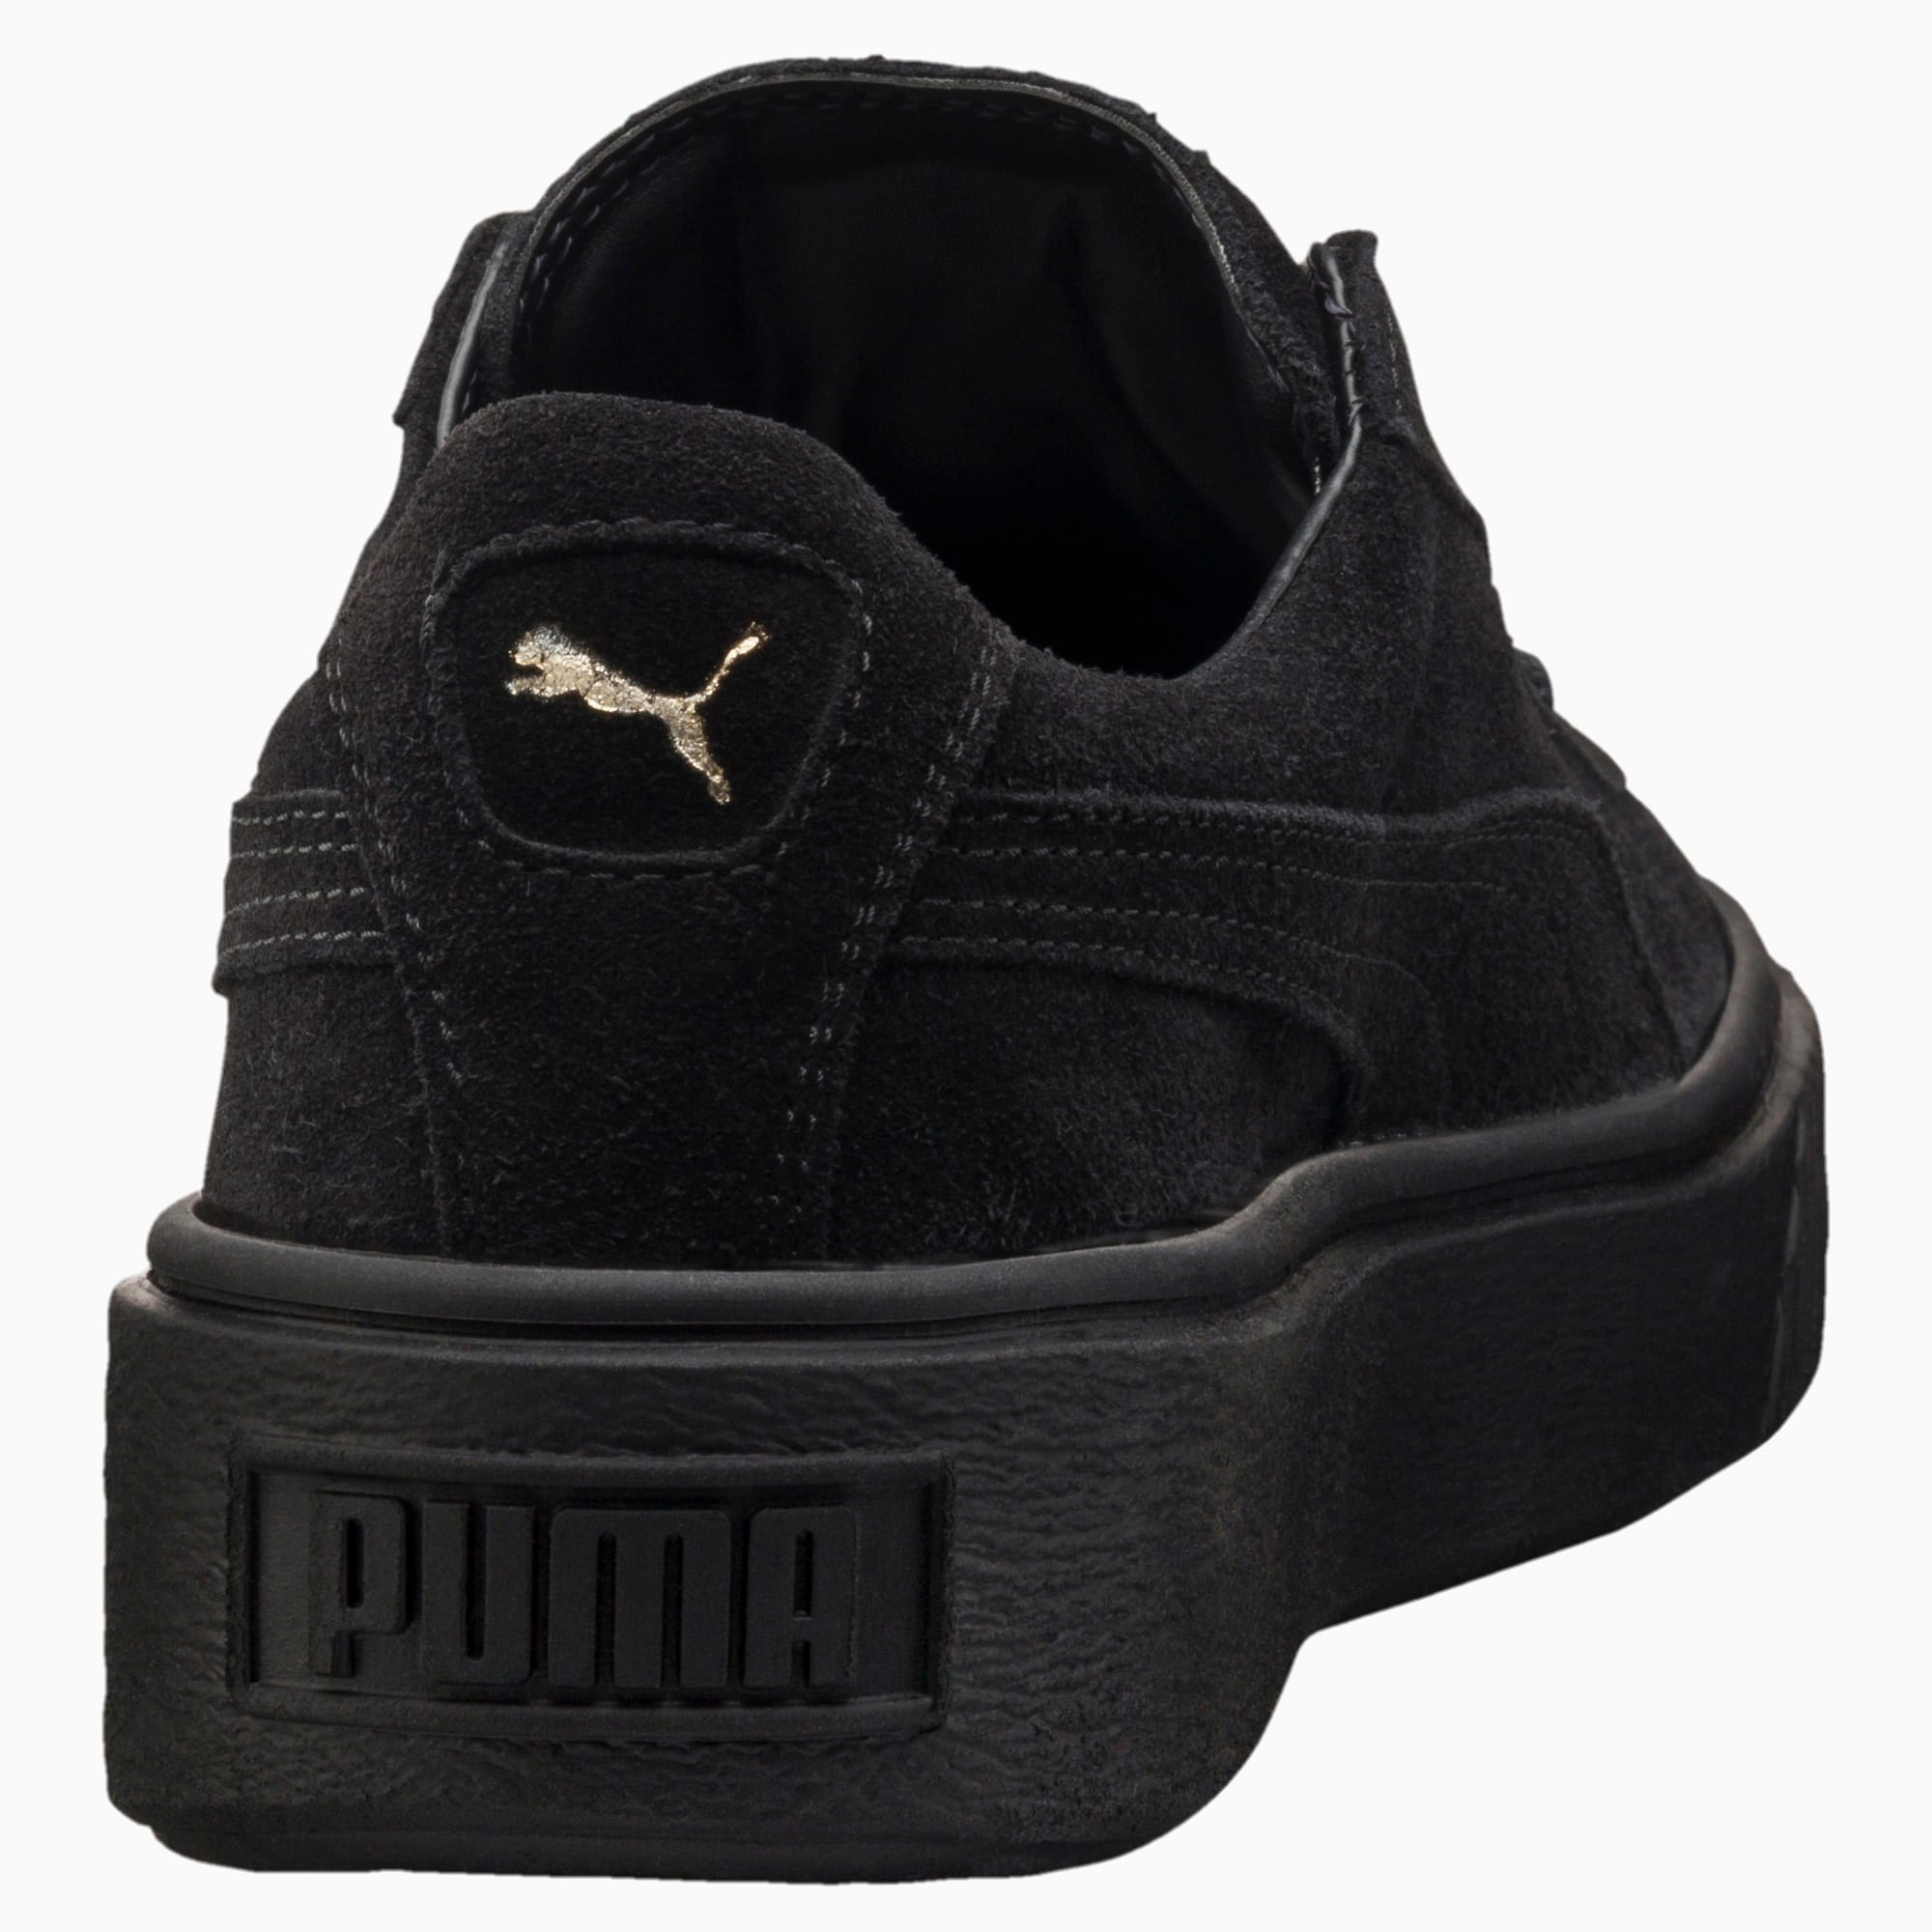 puma suede platform black gold